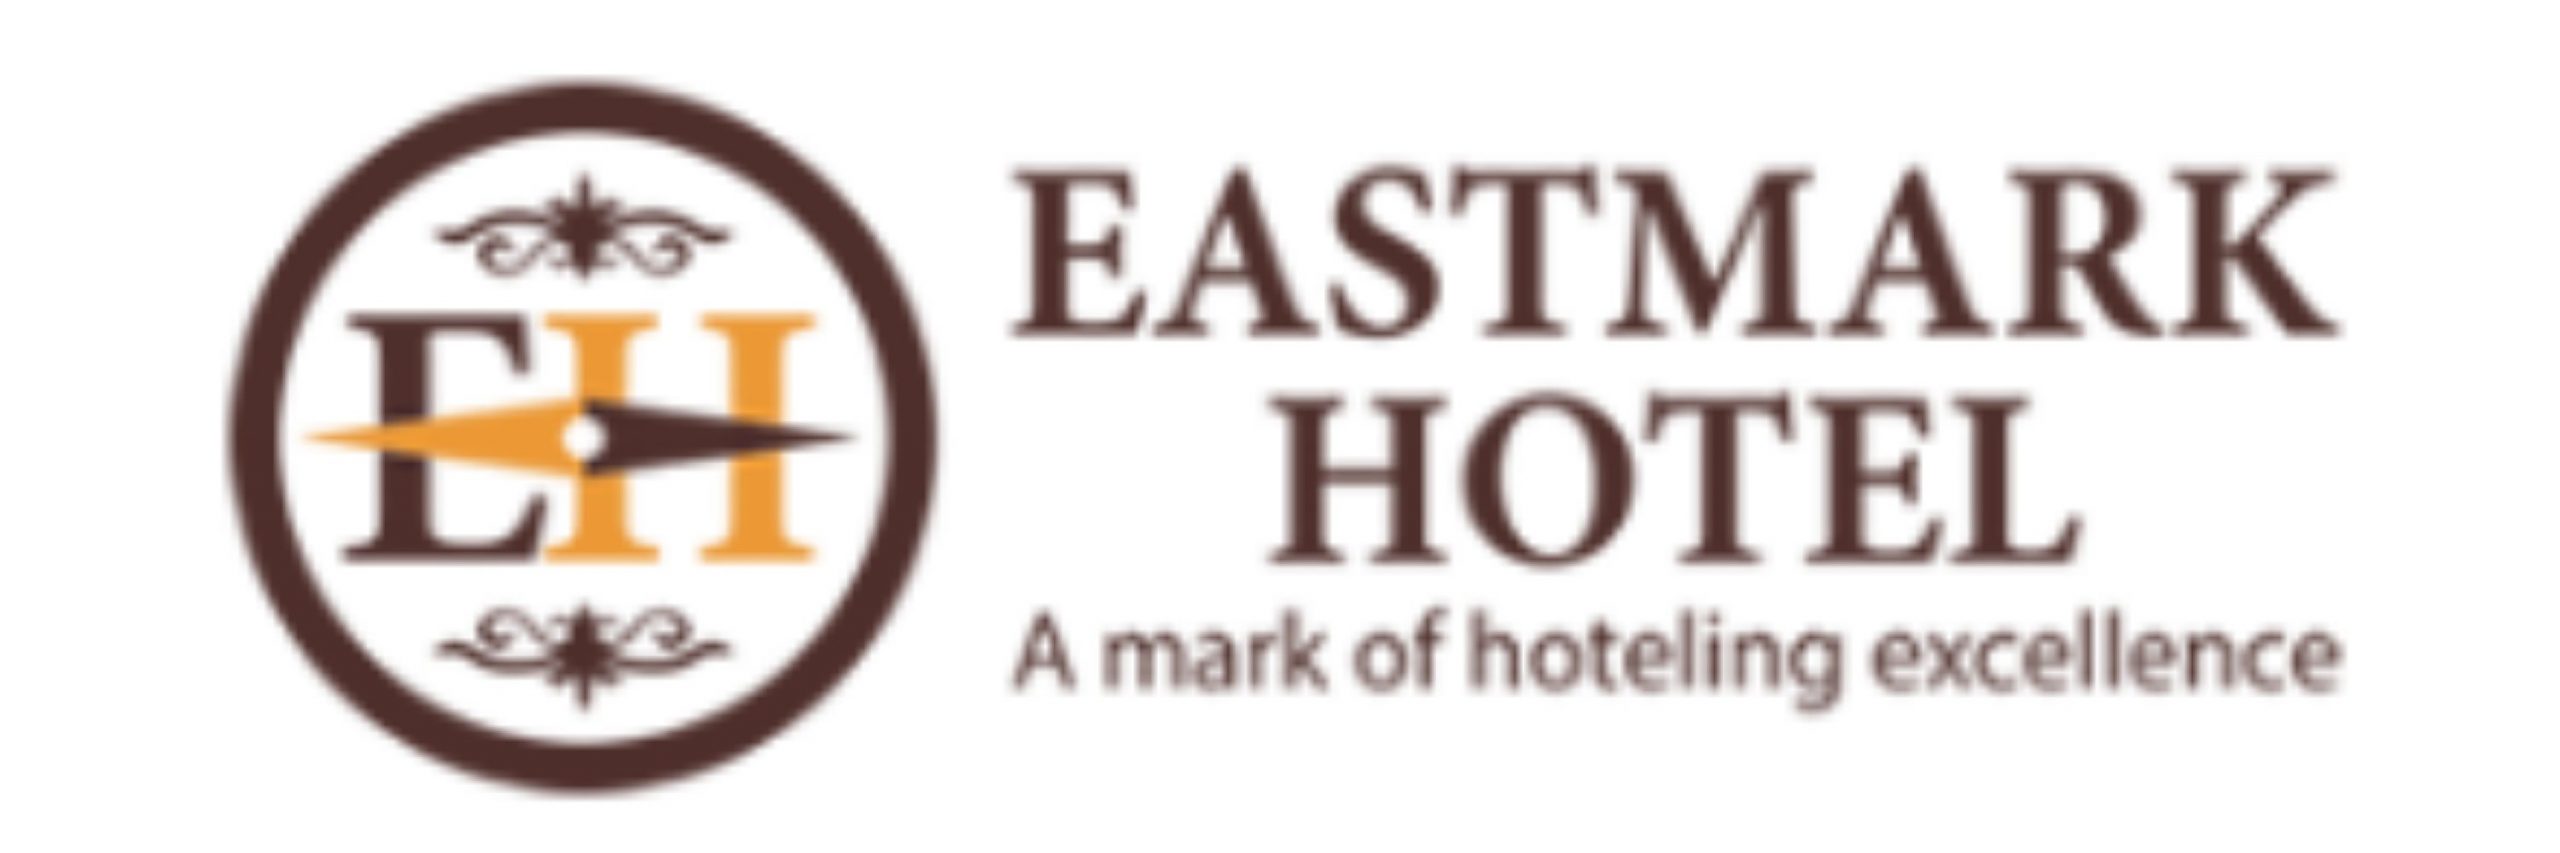 Eastmark Hotel |   Standard Room